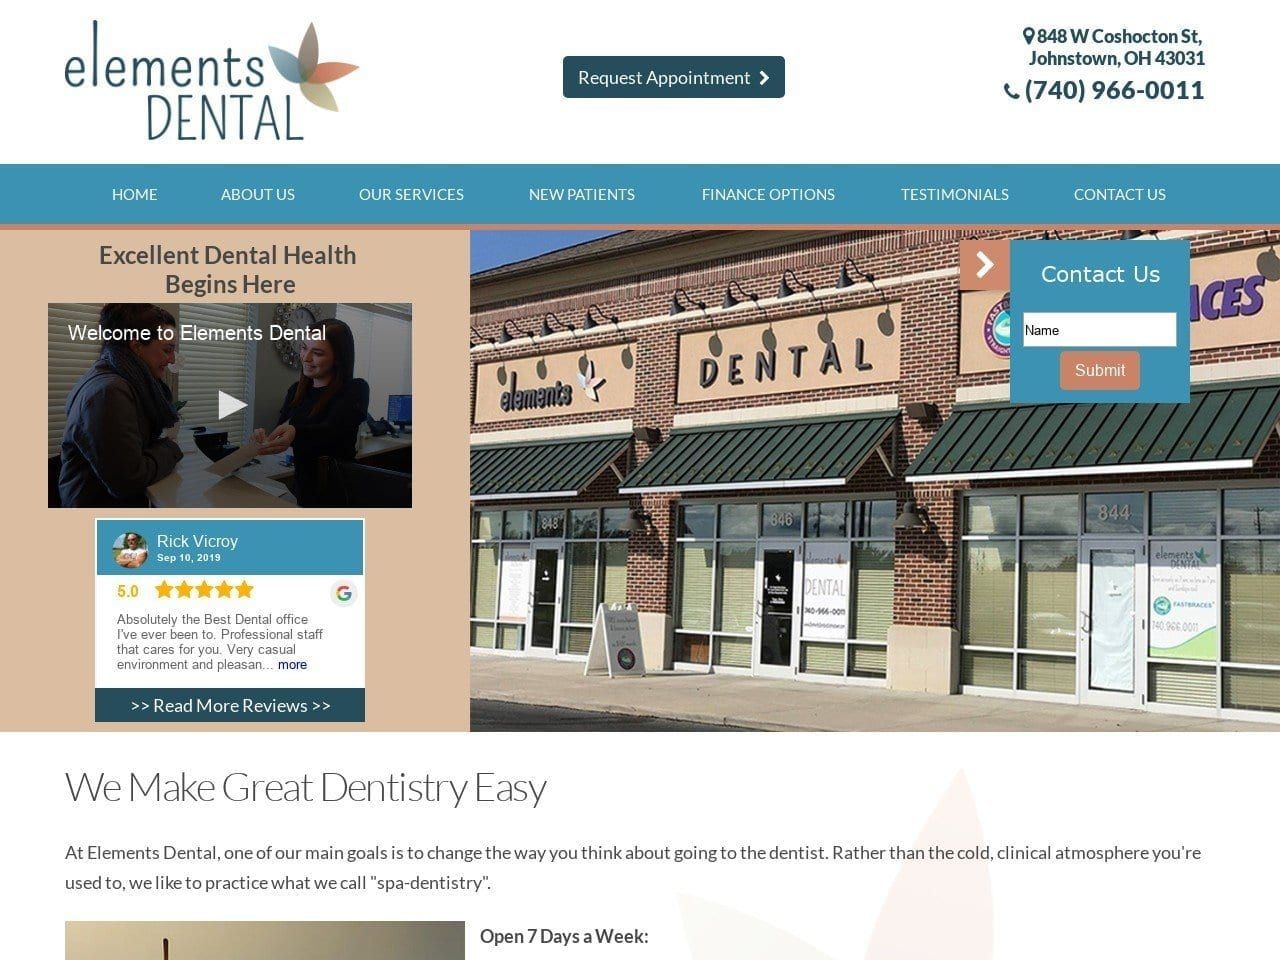 Elements Dental Website Screenshot from elementsdentalofjohnstown.com